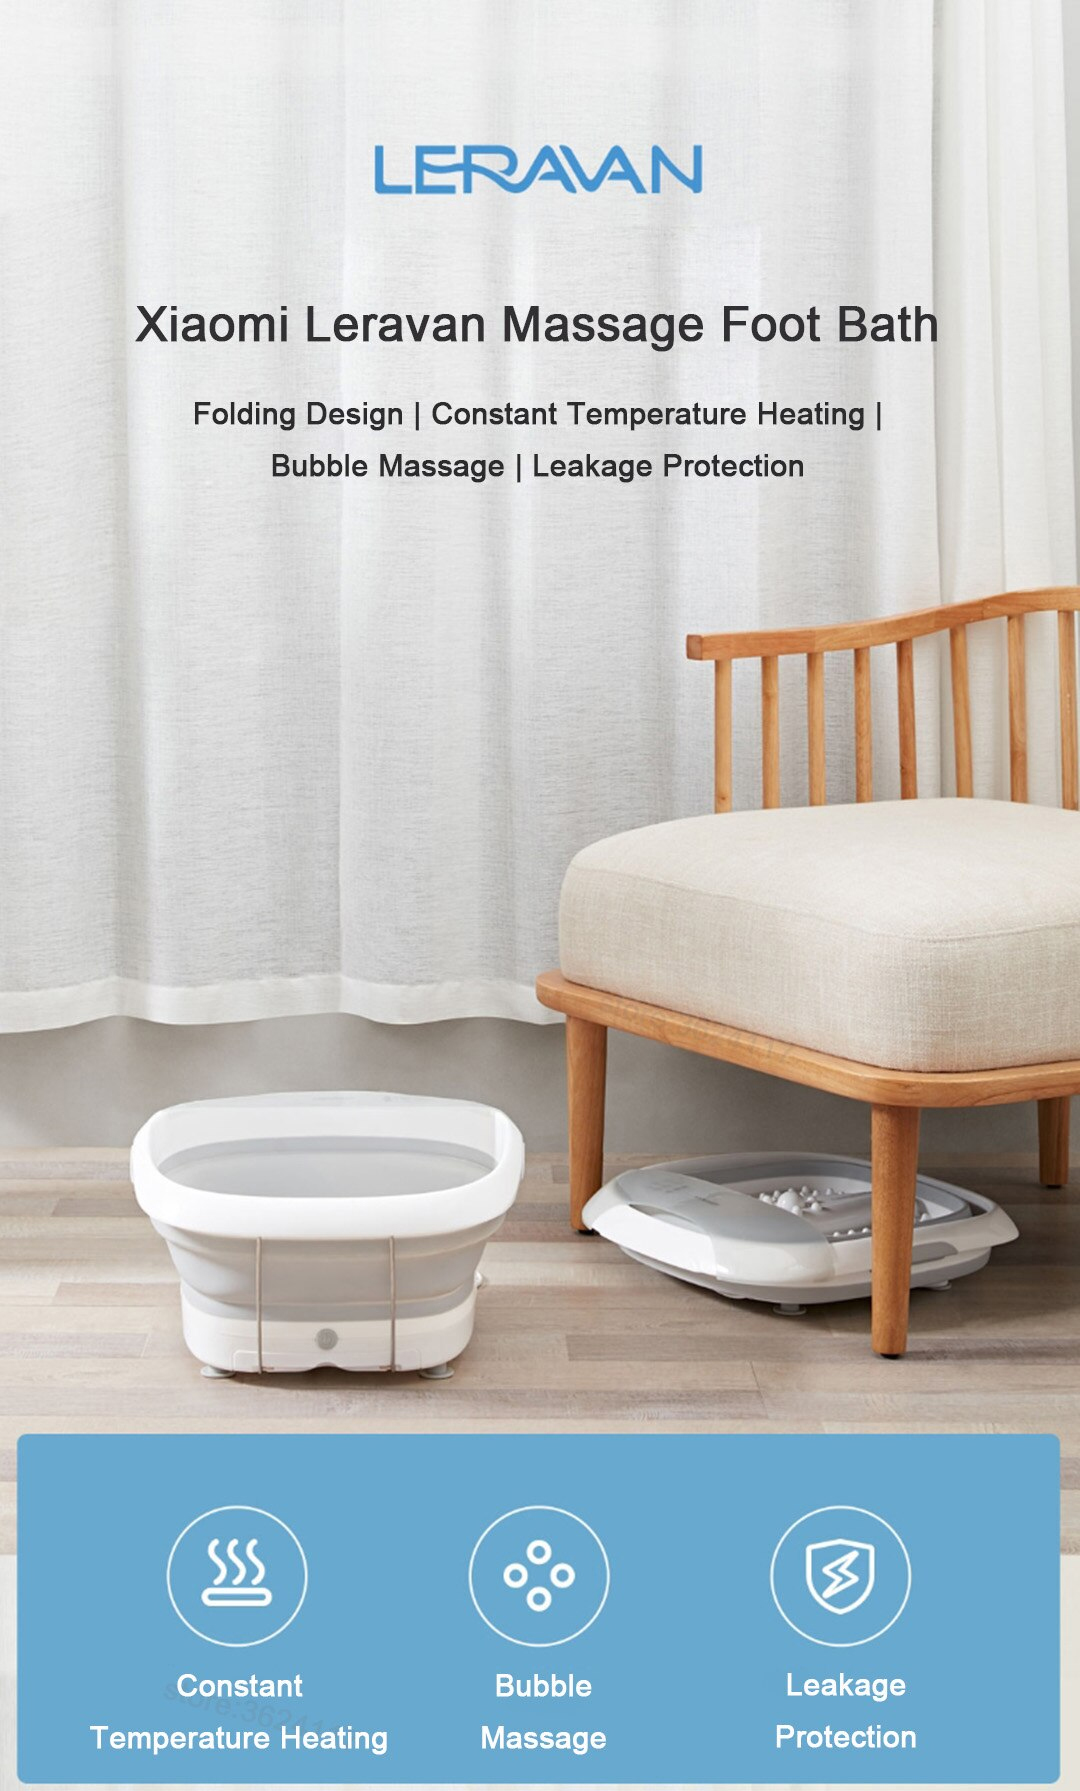 Xiaomi Leravan Massage Foot Bath Folding Design I Constant Temperature Heating I Bubble Massage I Leakage Protection